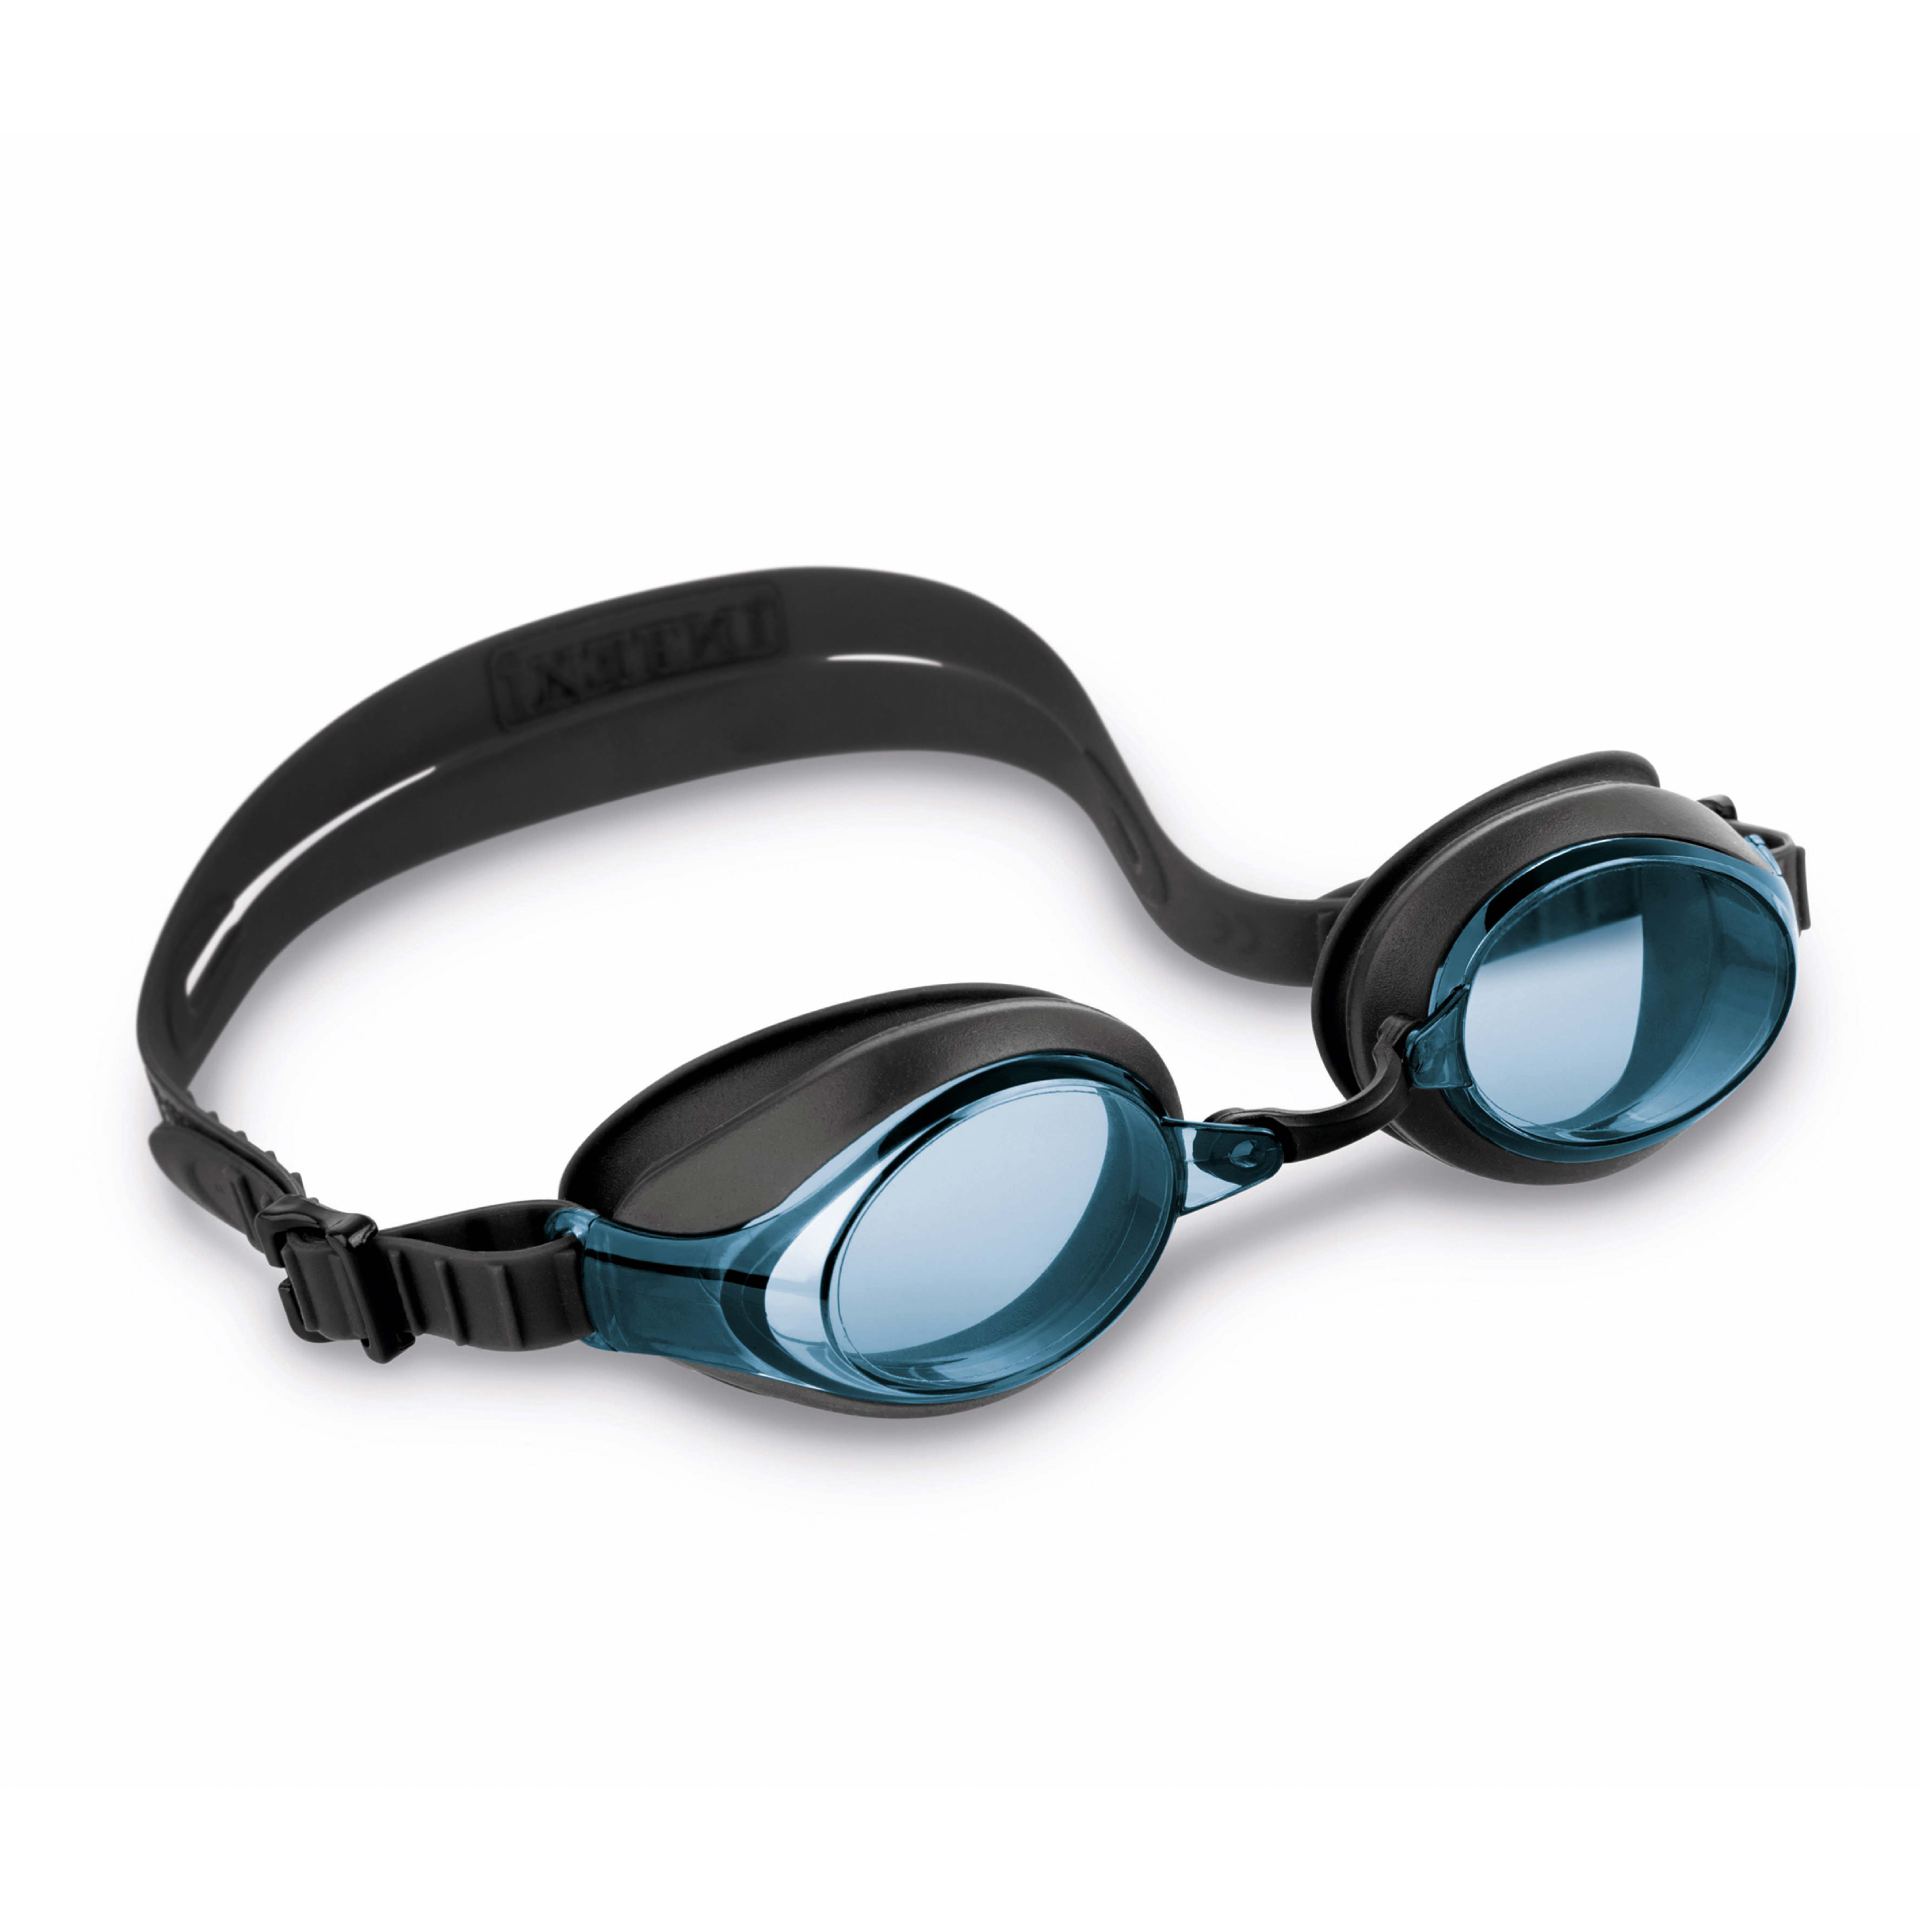 Intex silicone sport racing goggles - Zwart